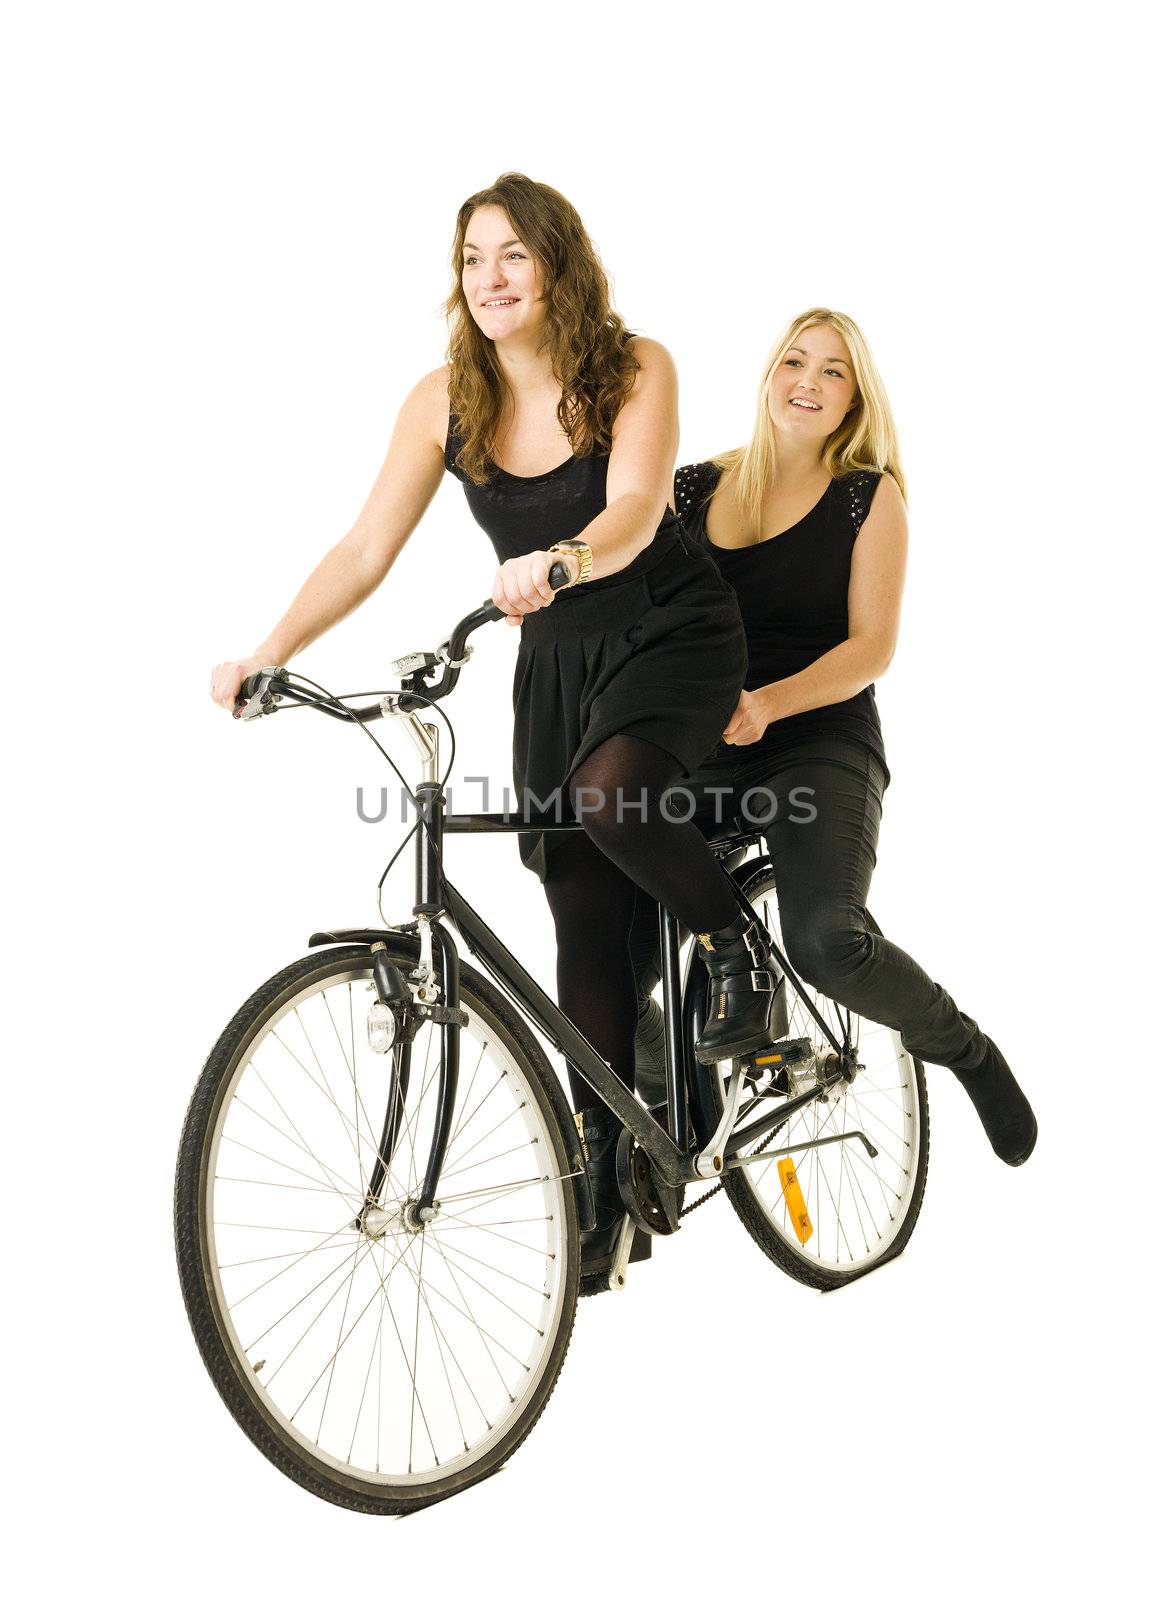 Girls on bicycle by gemenacom